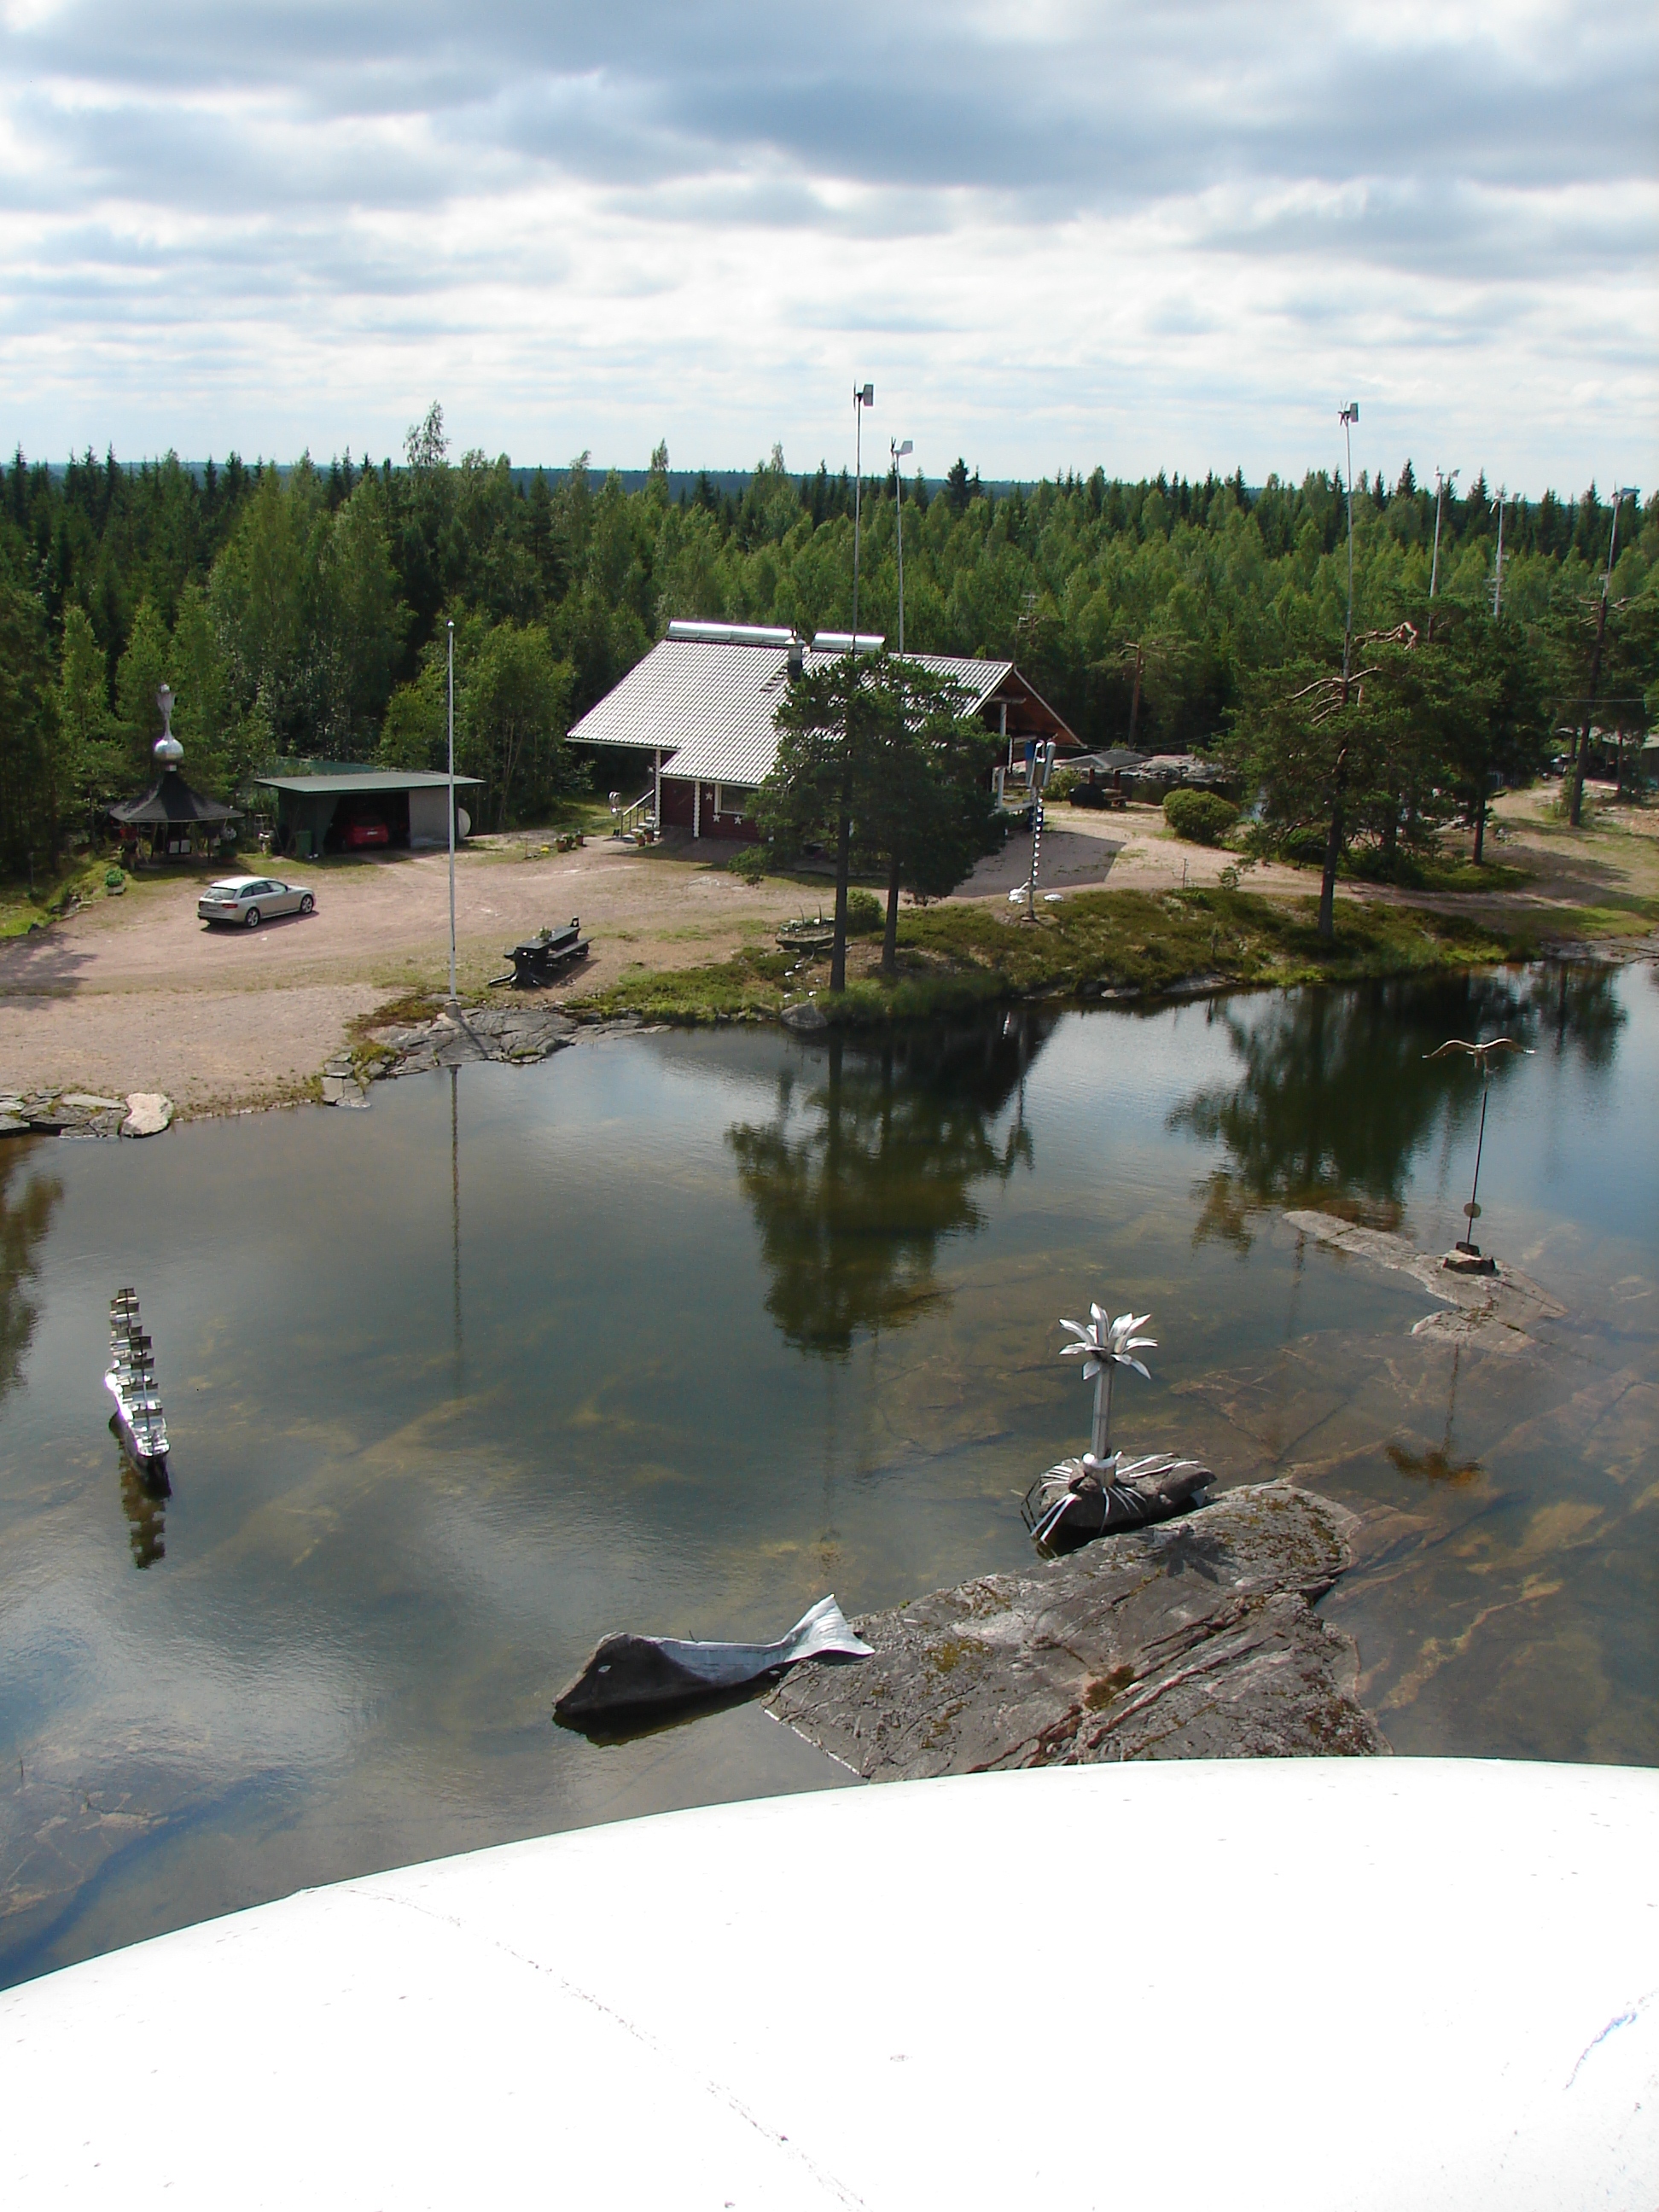 Futuro, Poytya, Finland - 071014 - 45